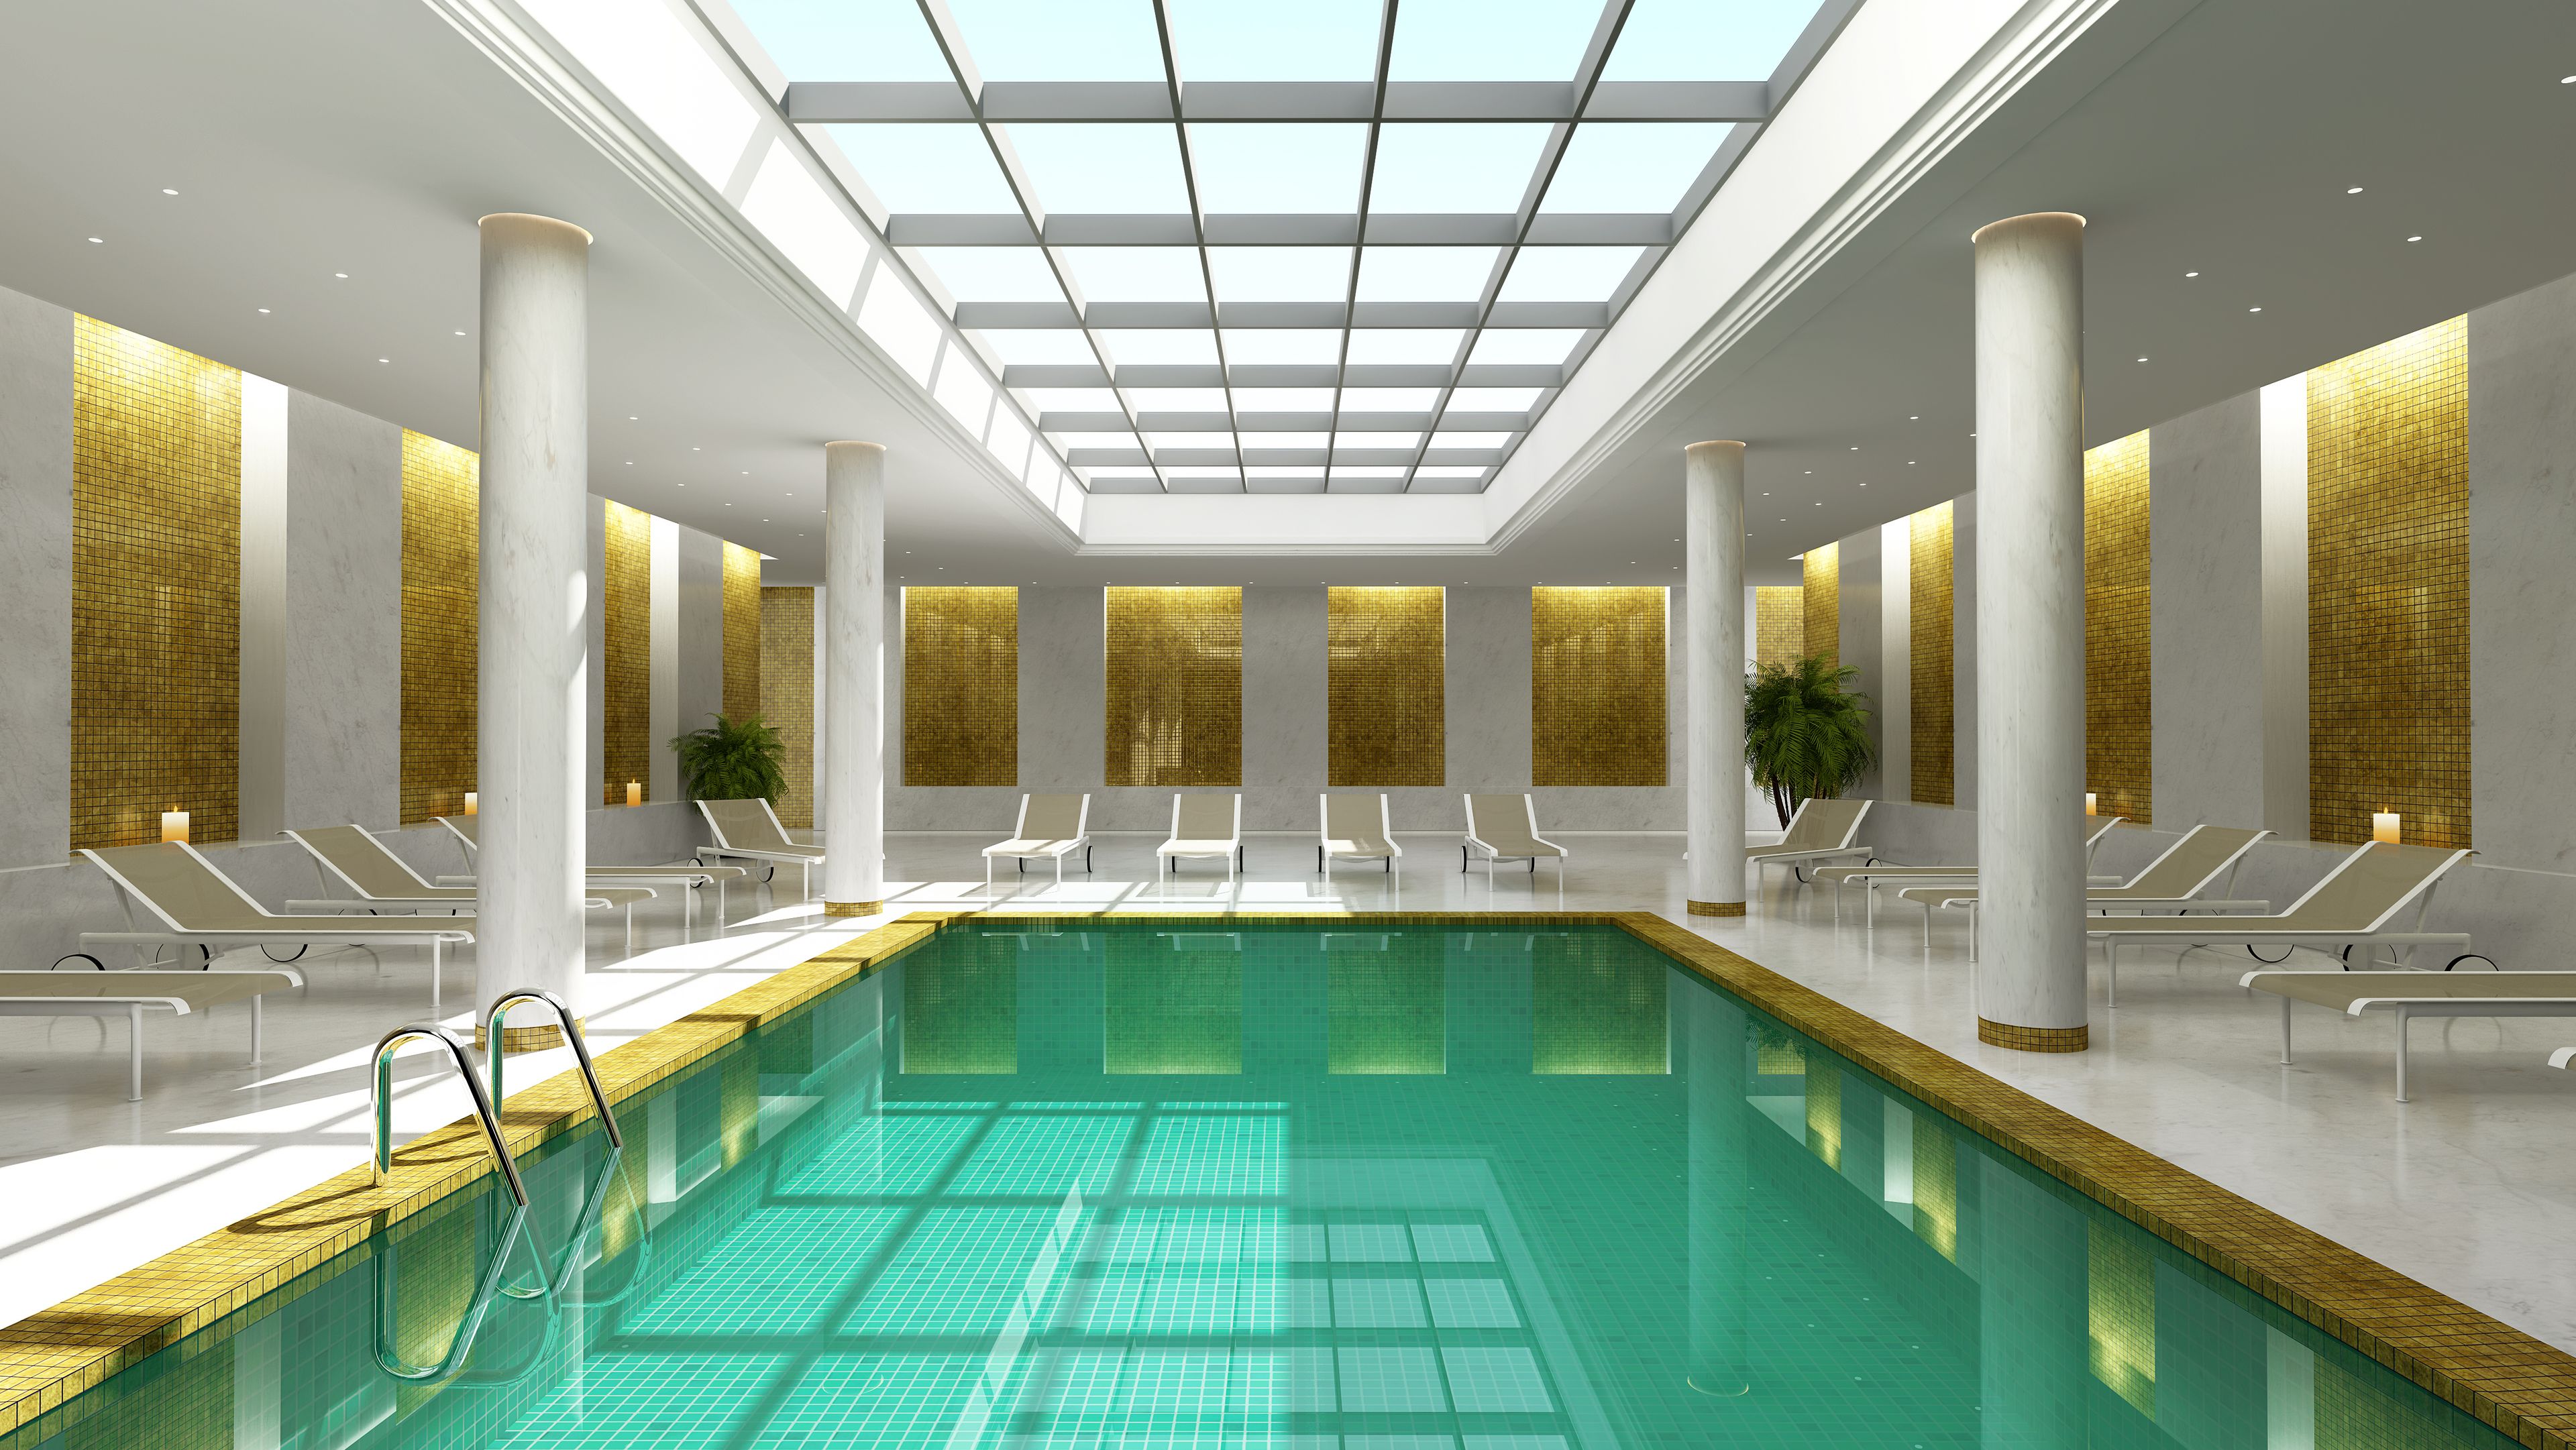 Swimming pool in spa hotel